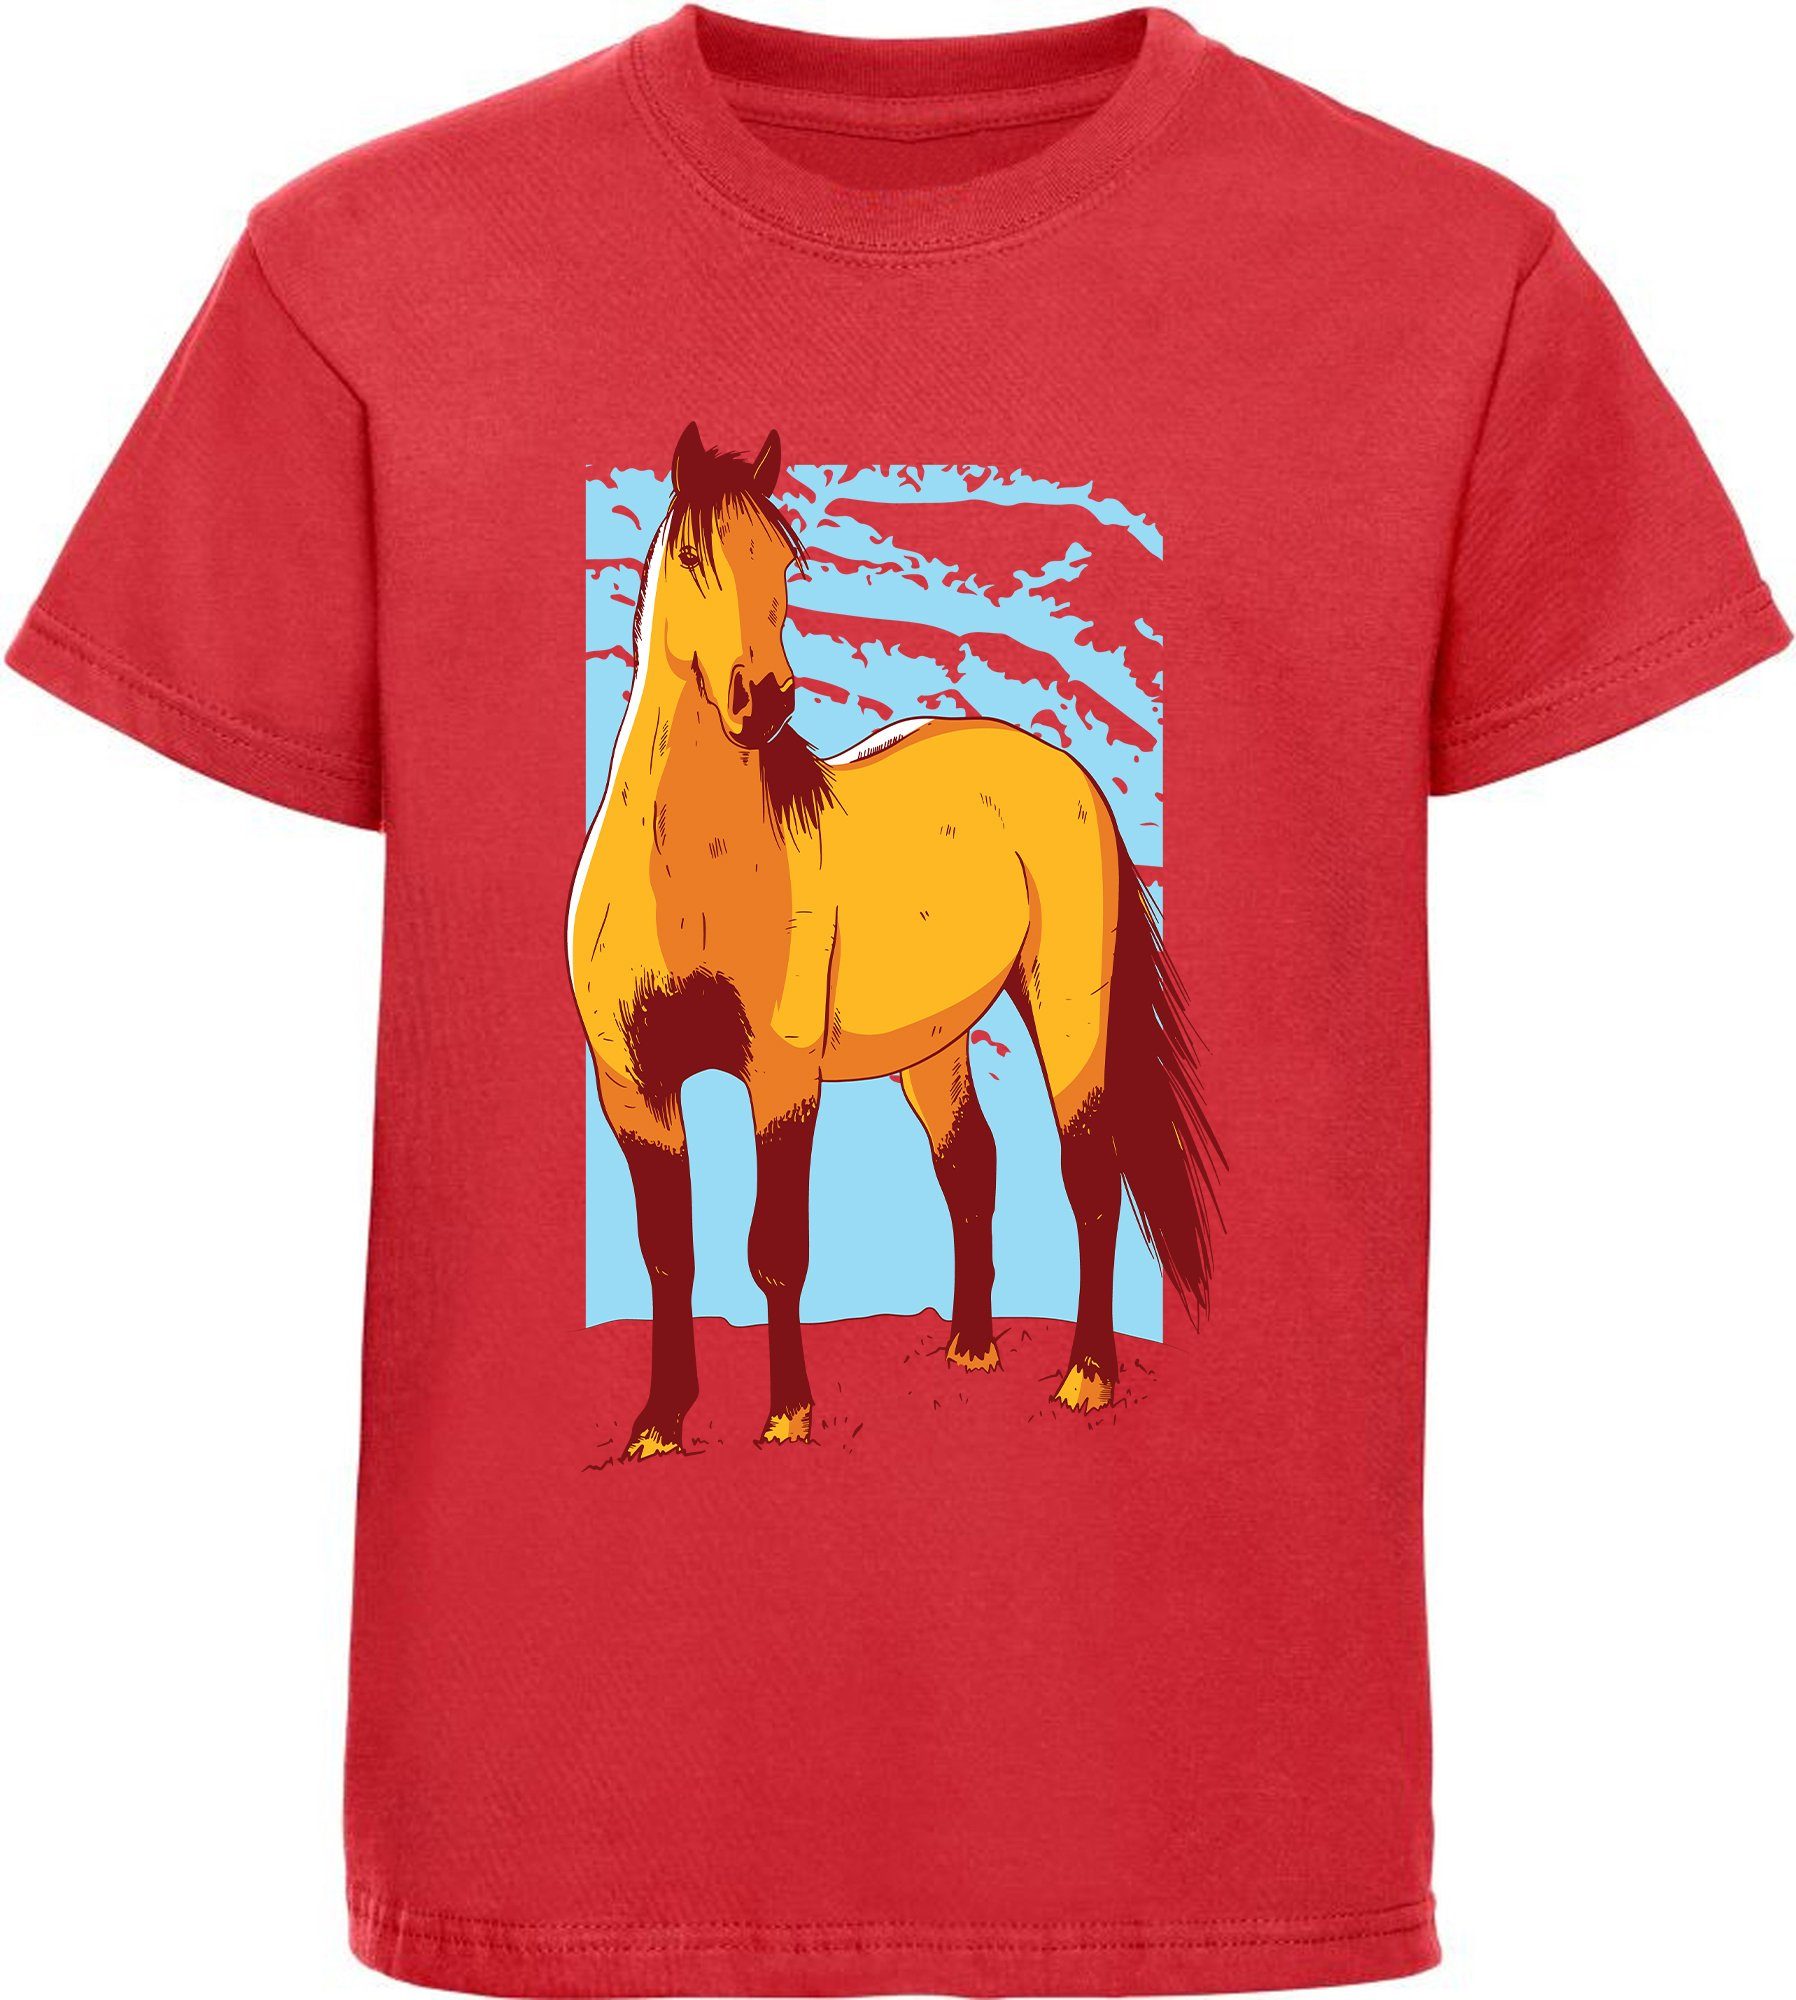 MyDesign24 Print-Shirt bedrucktes Mädchen T-Shirt elegantes Pferd Baumwollshirt mit Aufdruck, i155 rot